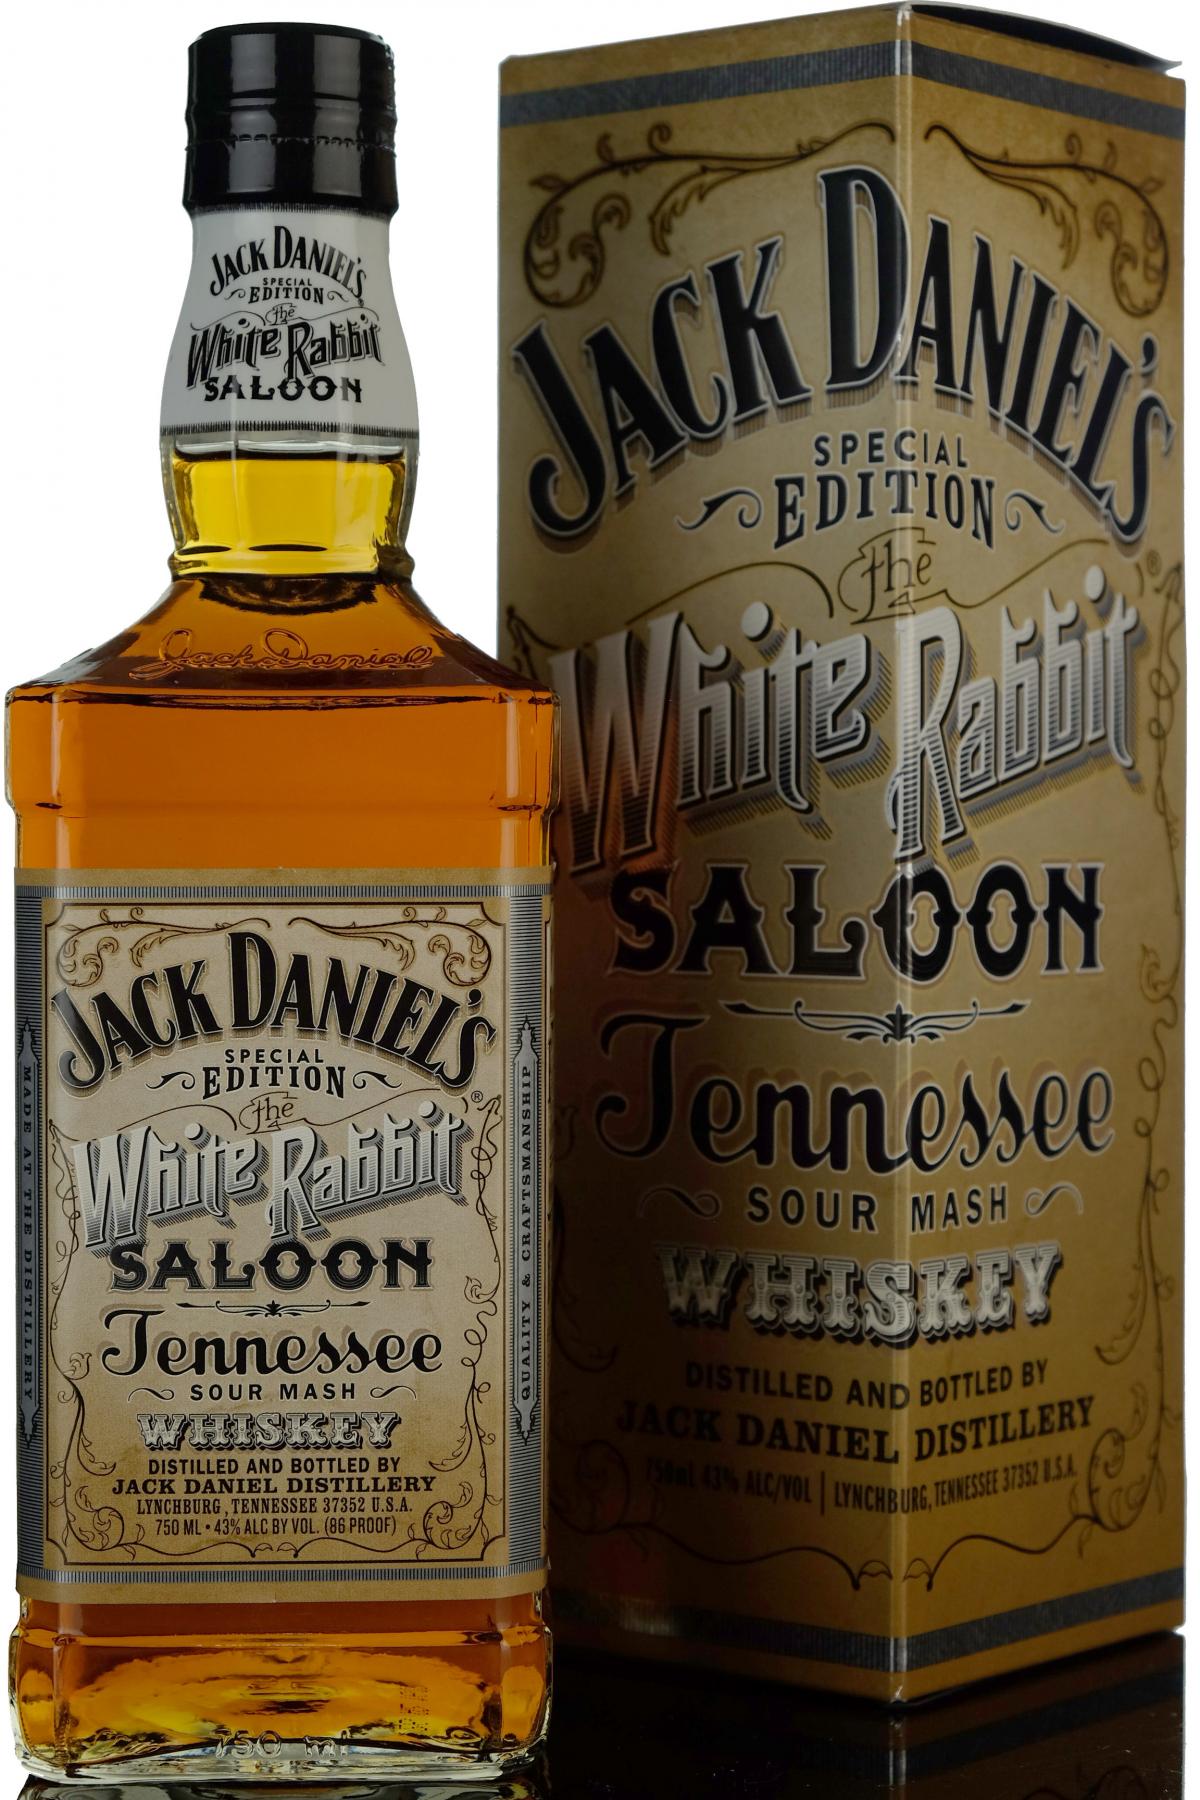 Jack Daniels The White Rabbit Saloon - 120th Anniversary - 2012 Release